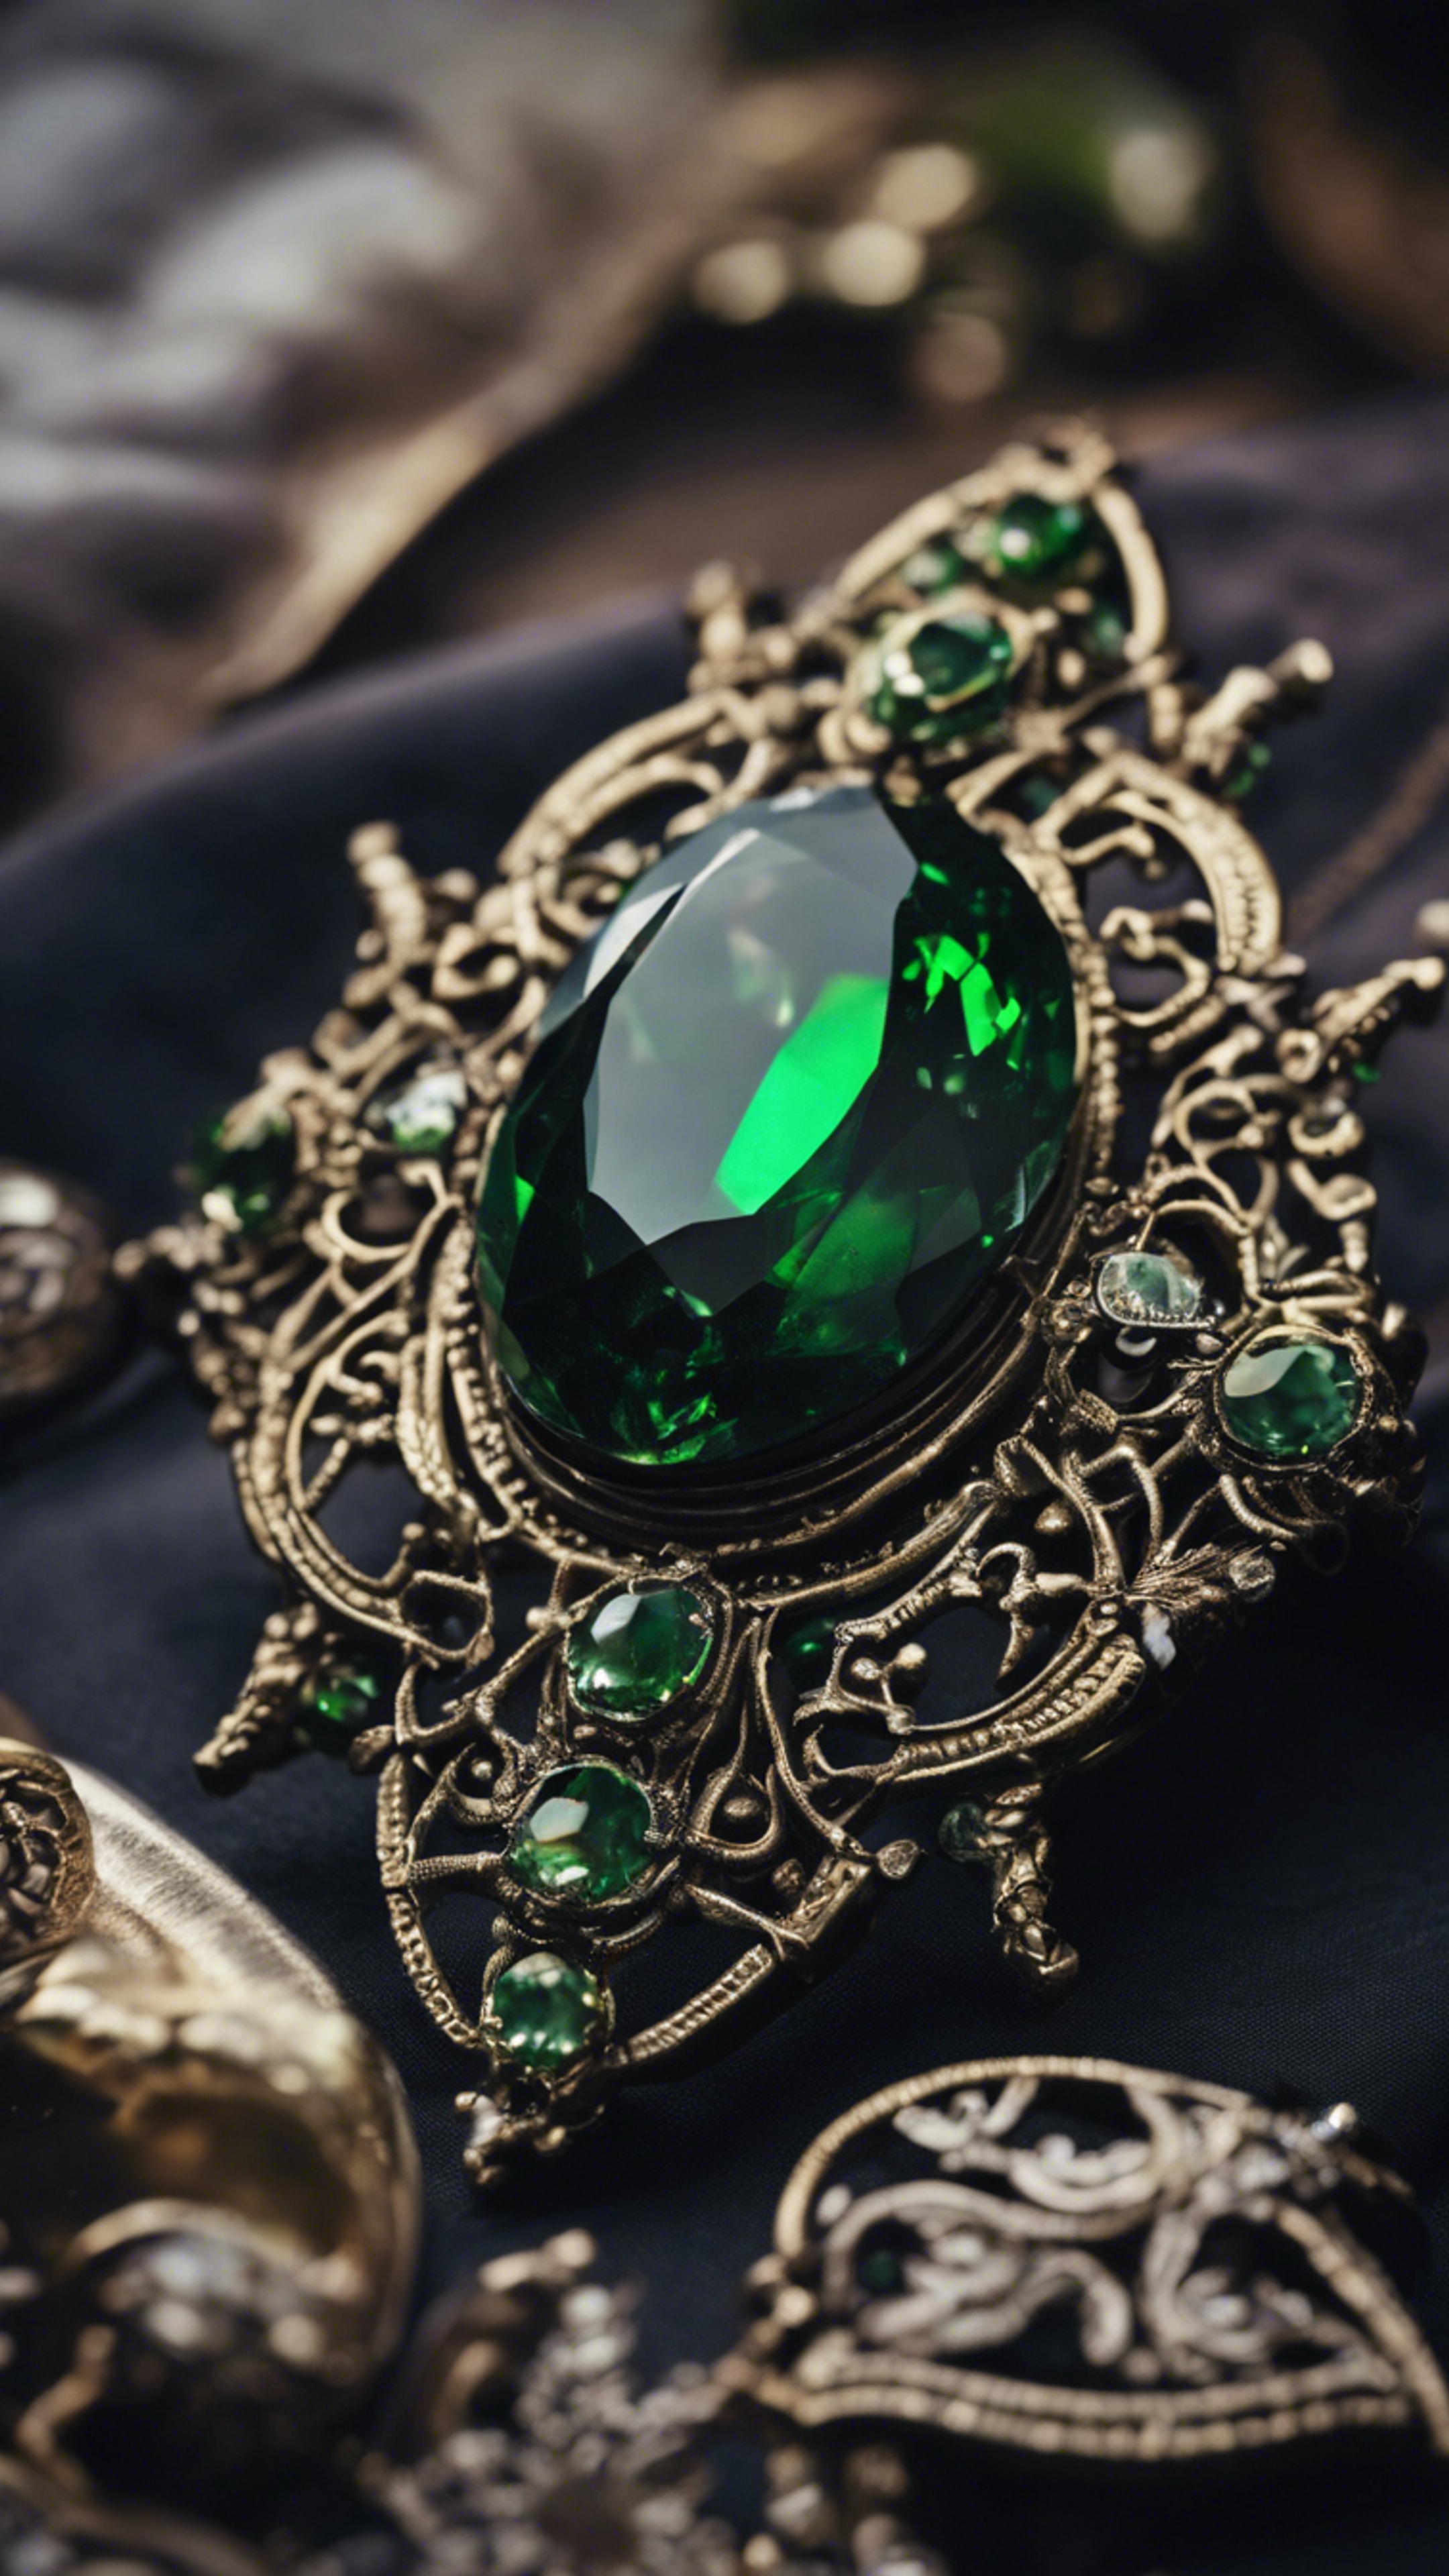 A mesmerizing black gothic brooch boasting a large green gem at its center. Wallpaper[79084900ffbf43c2b67e]